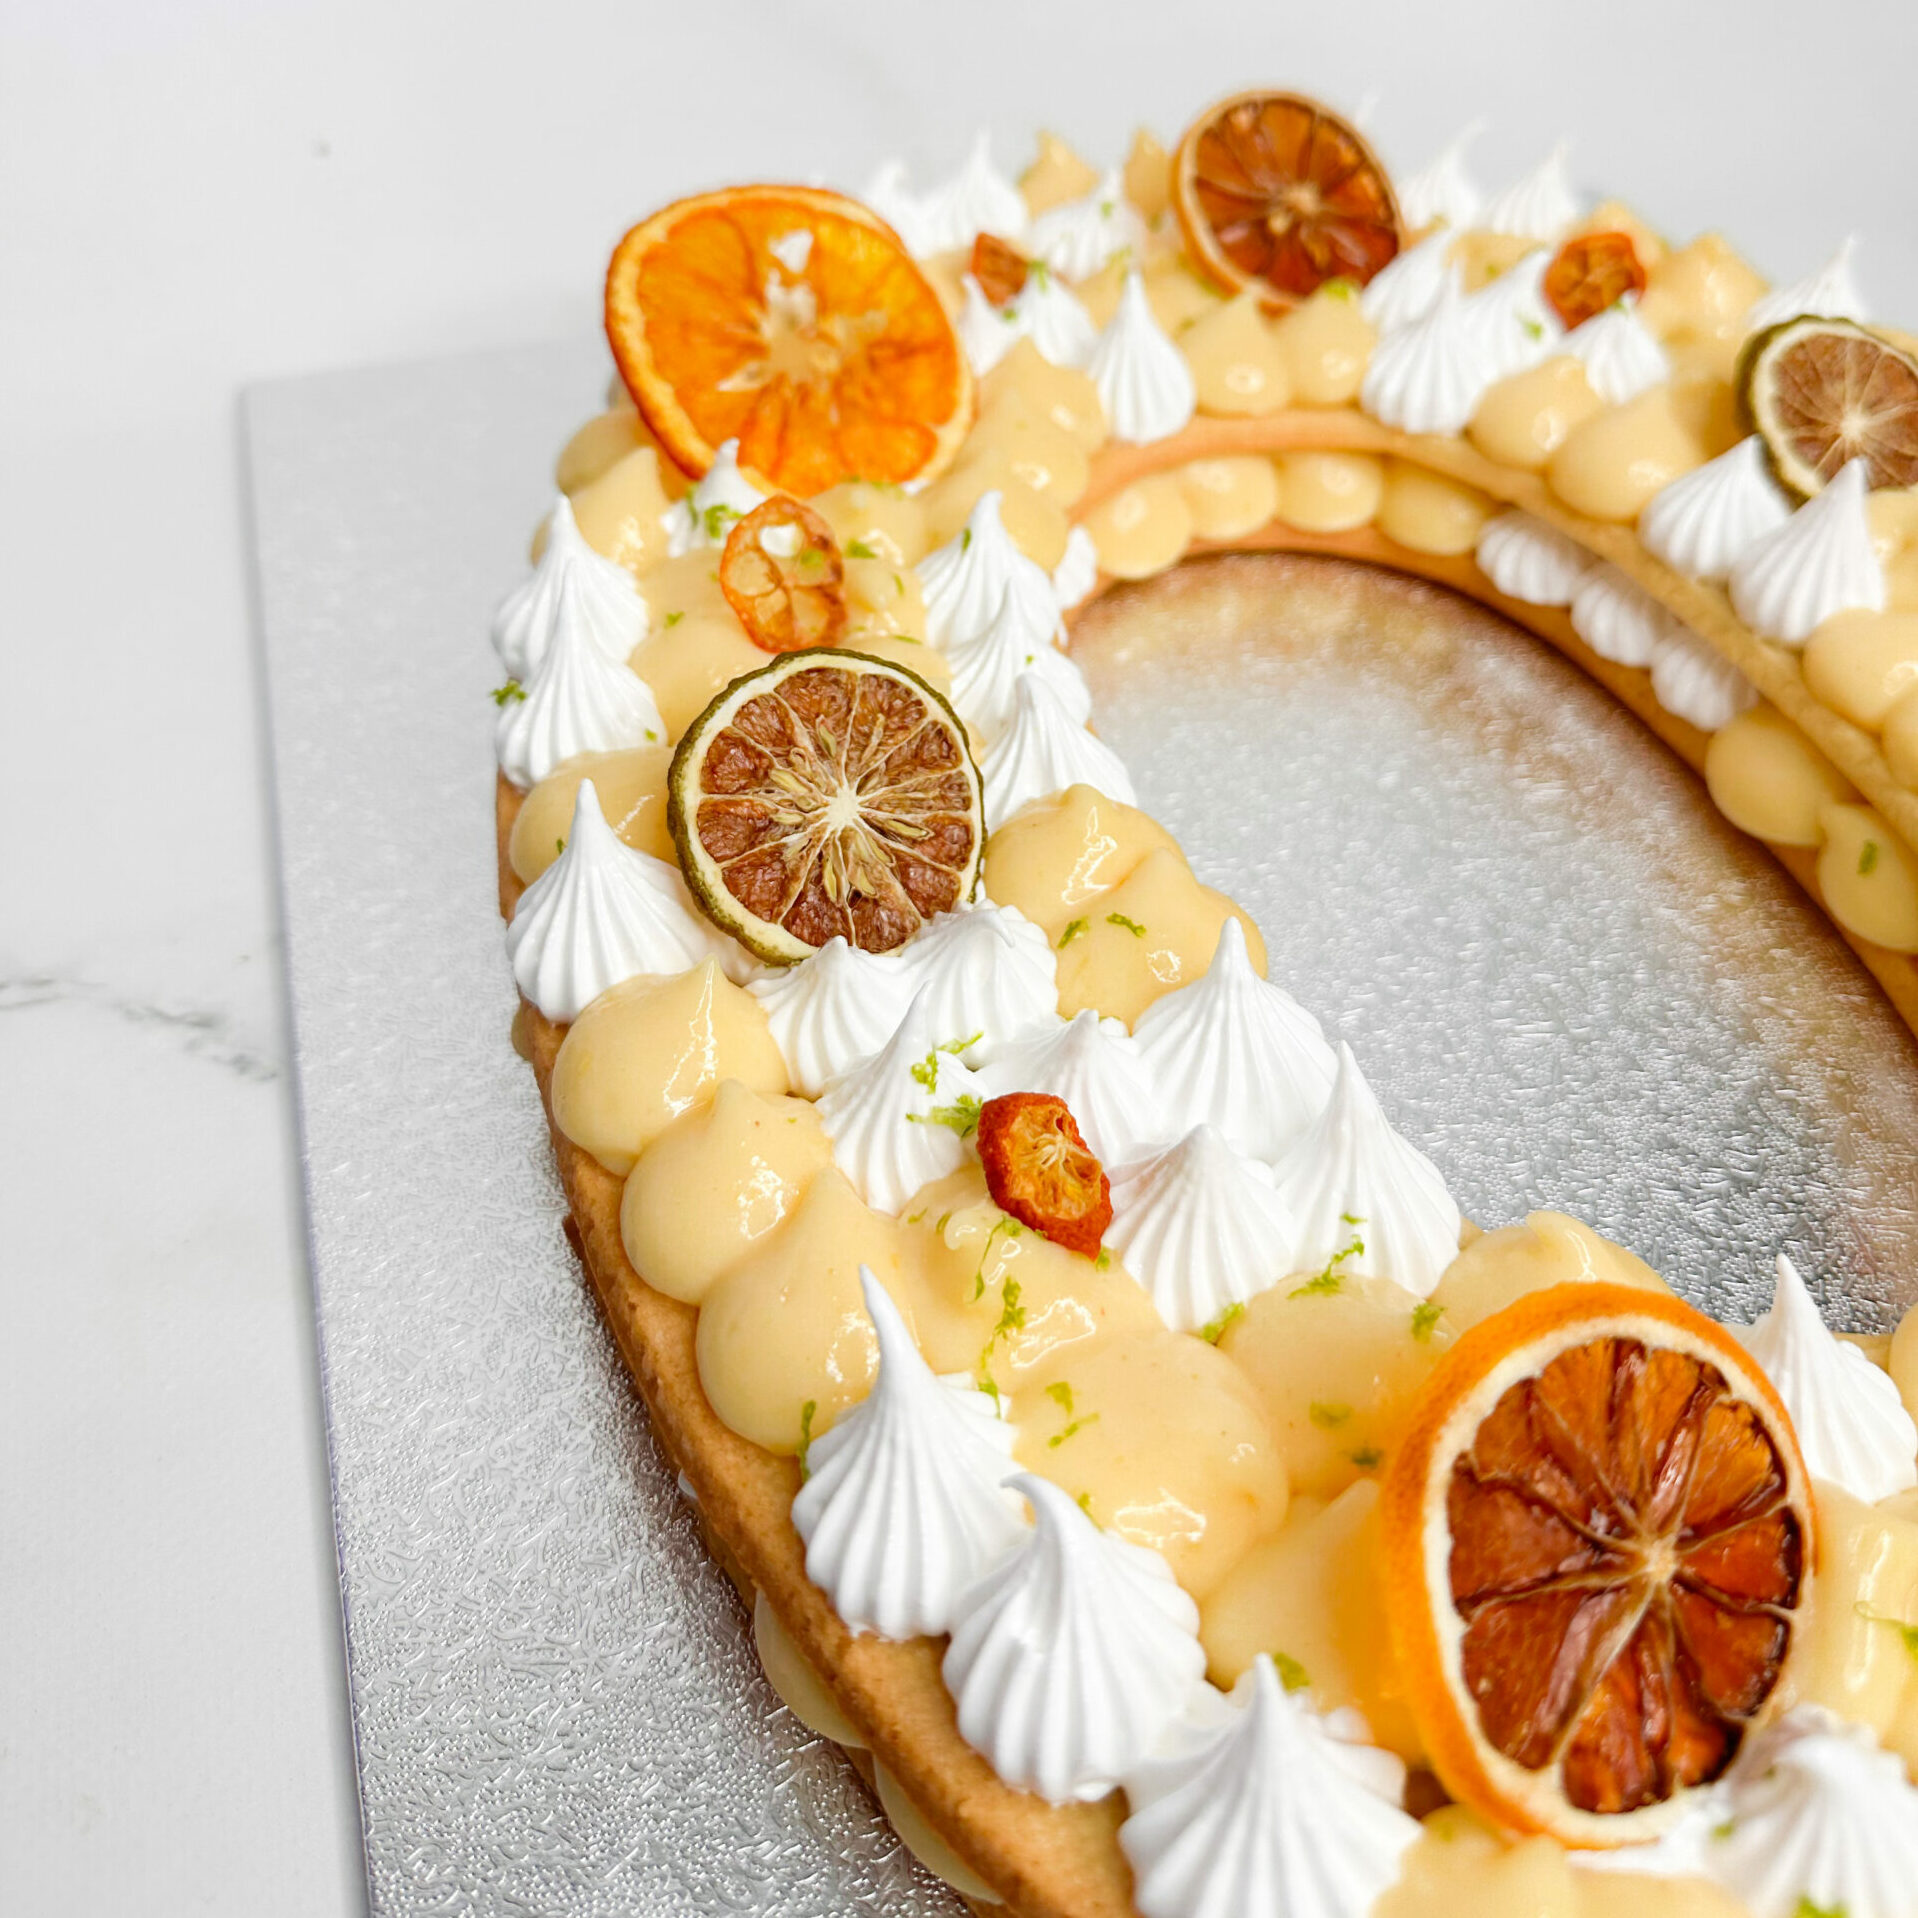 number cake façon tarte citron meringuée